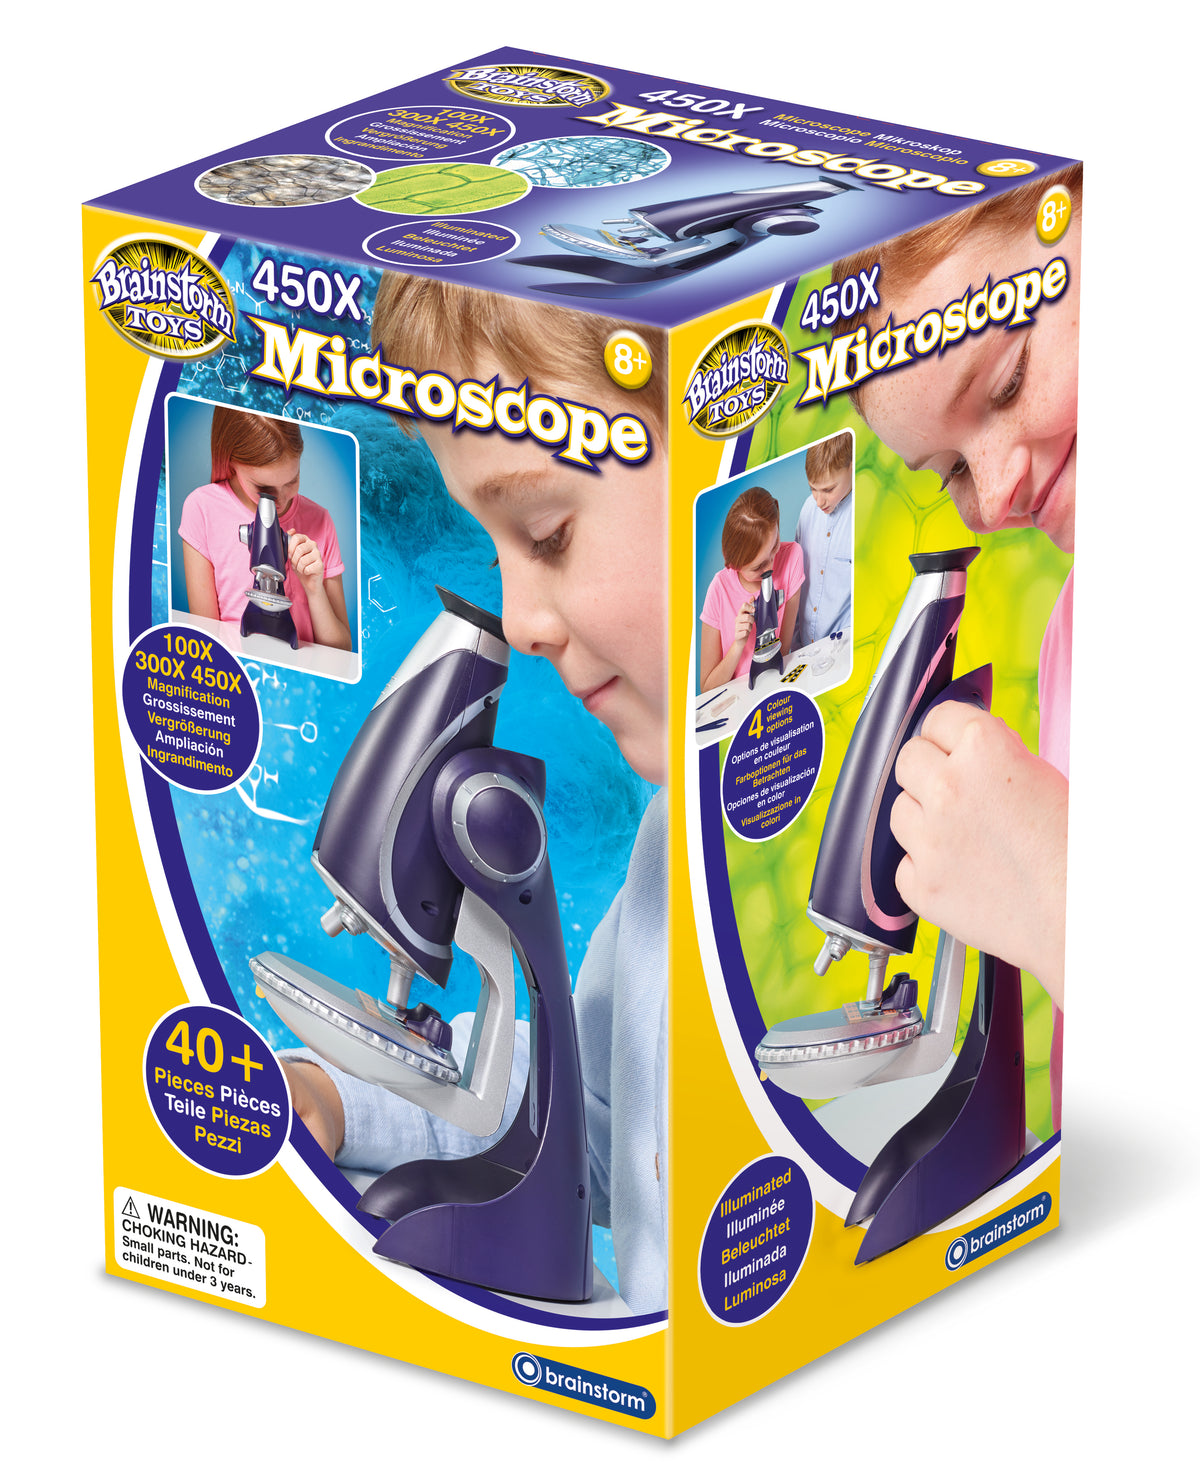 Brainstorm Microscope 450X